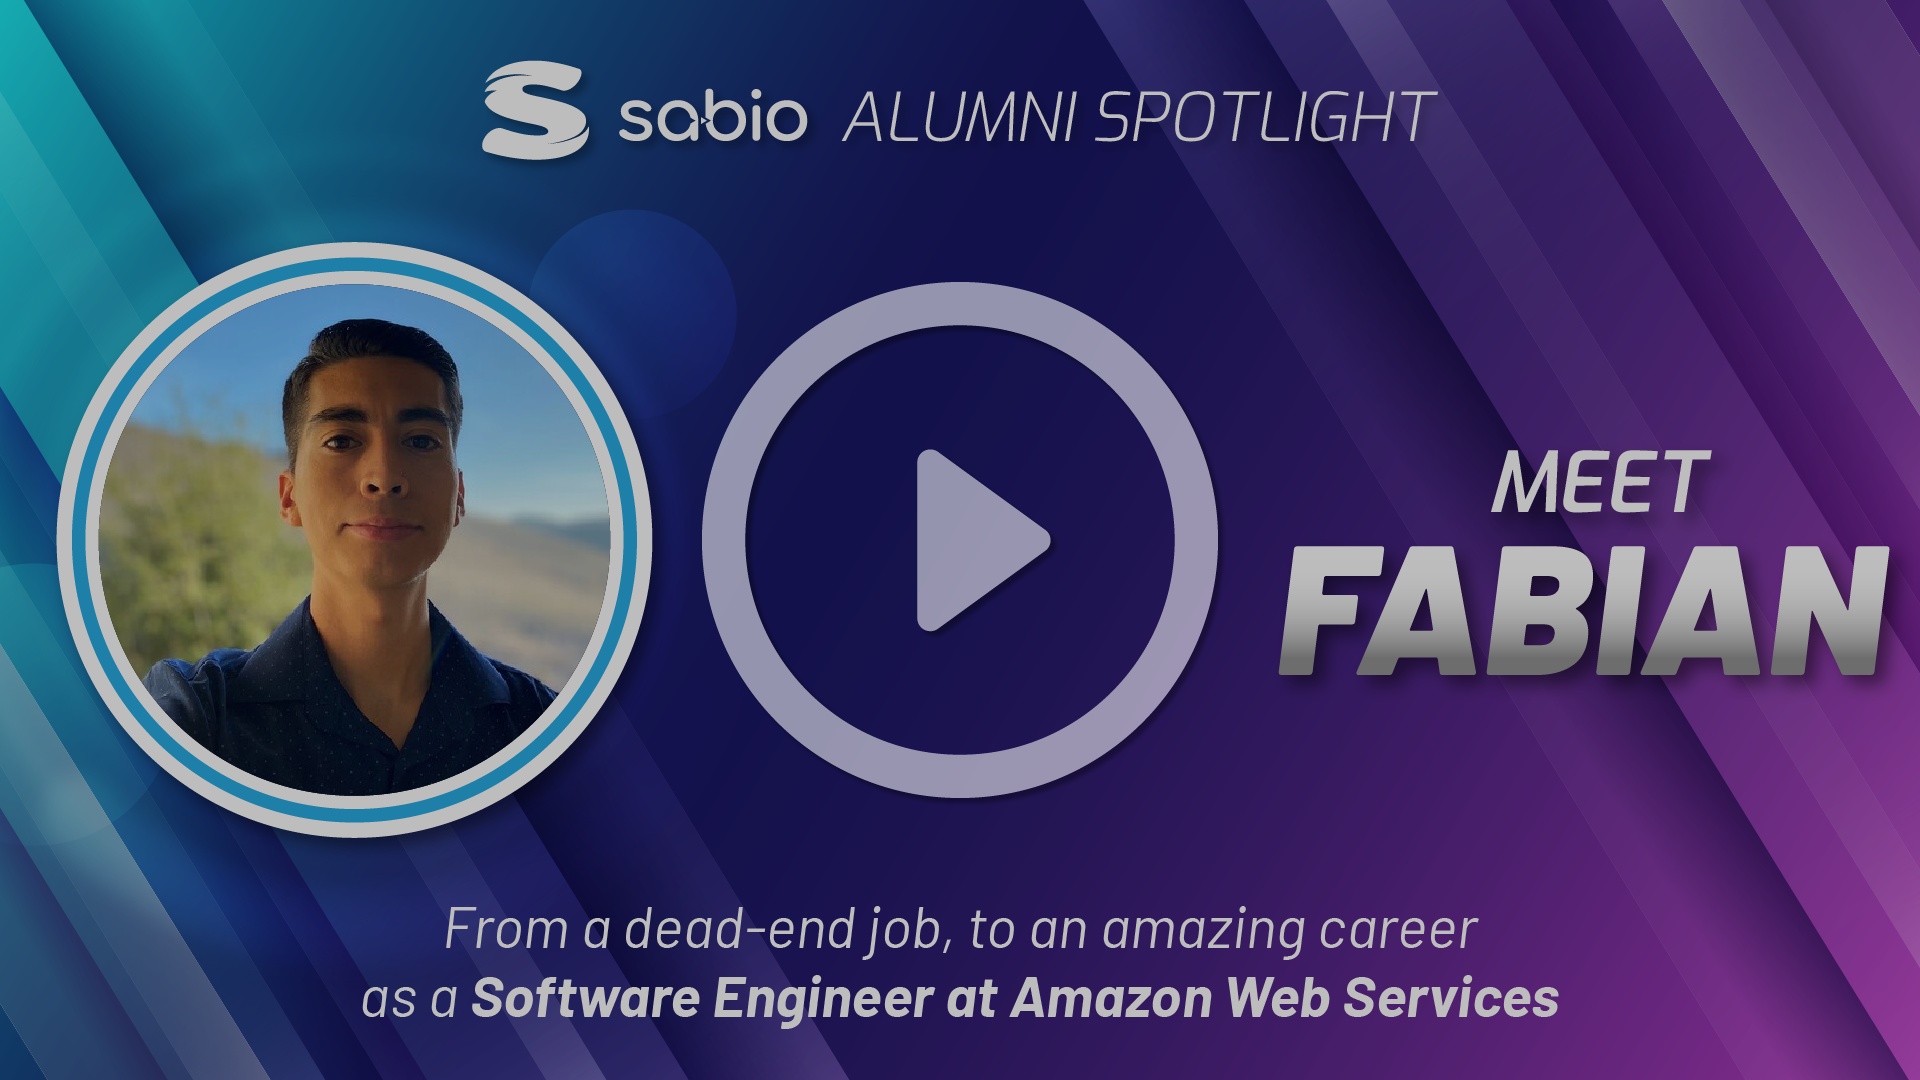 Sabio Alumni Spotlight: Fabian. Play symbol overlaid to the image.